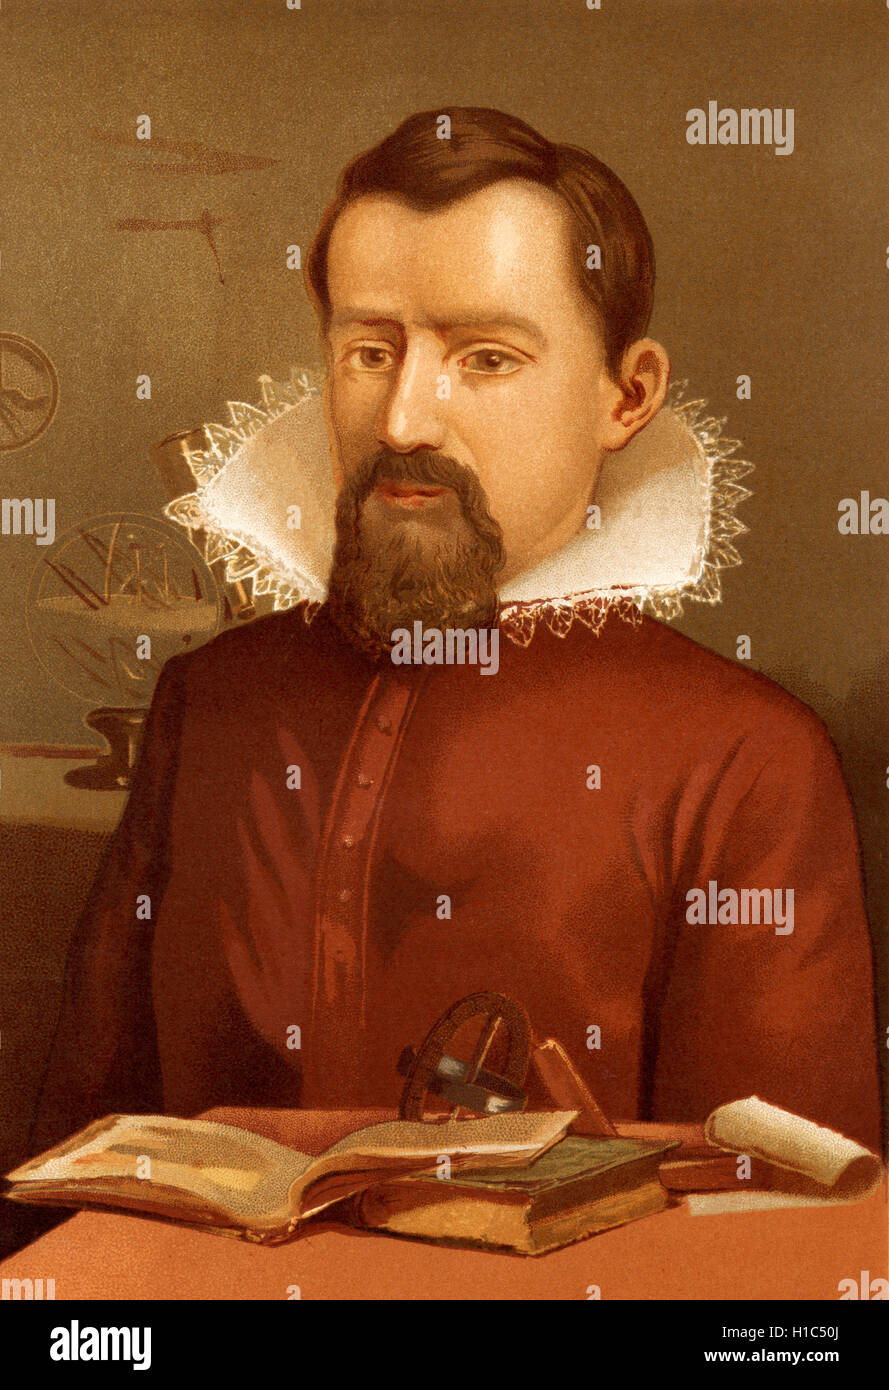 Johannes Kepler, 1571 - 1630. German mathematician, astronomer and astrologer. Stock Photo